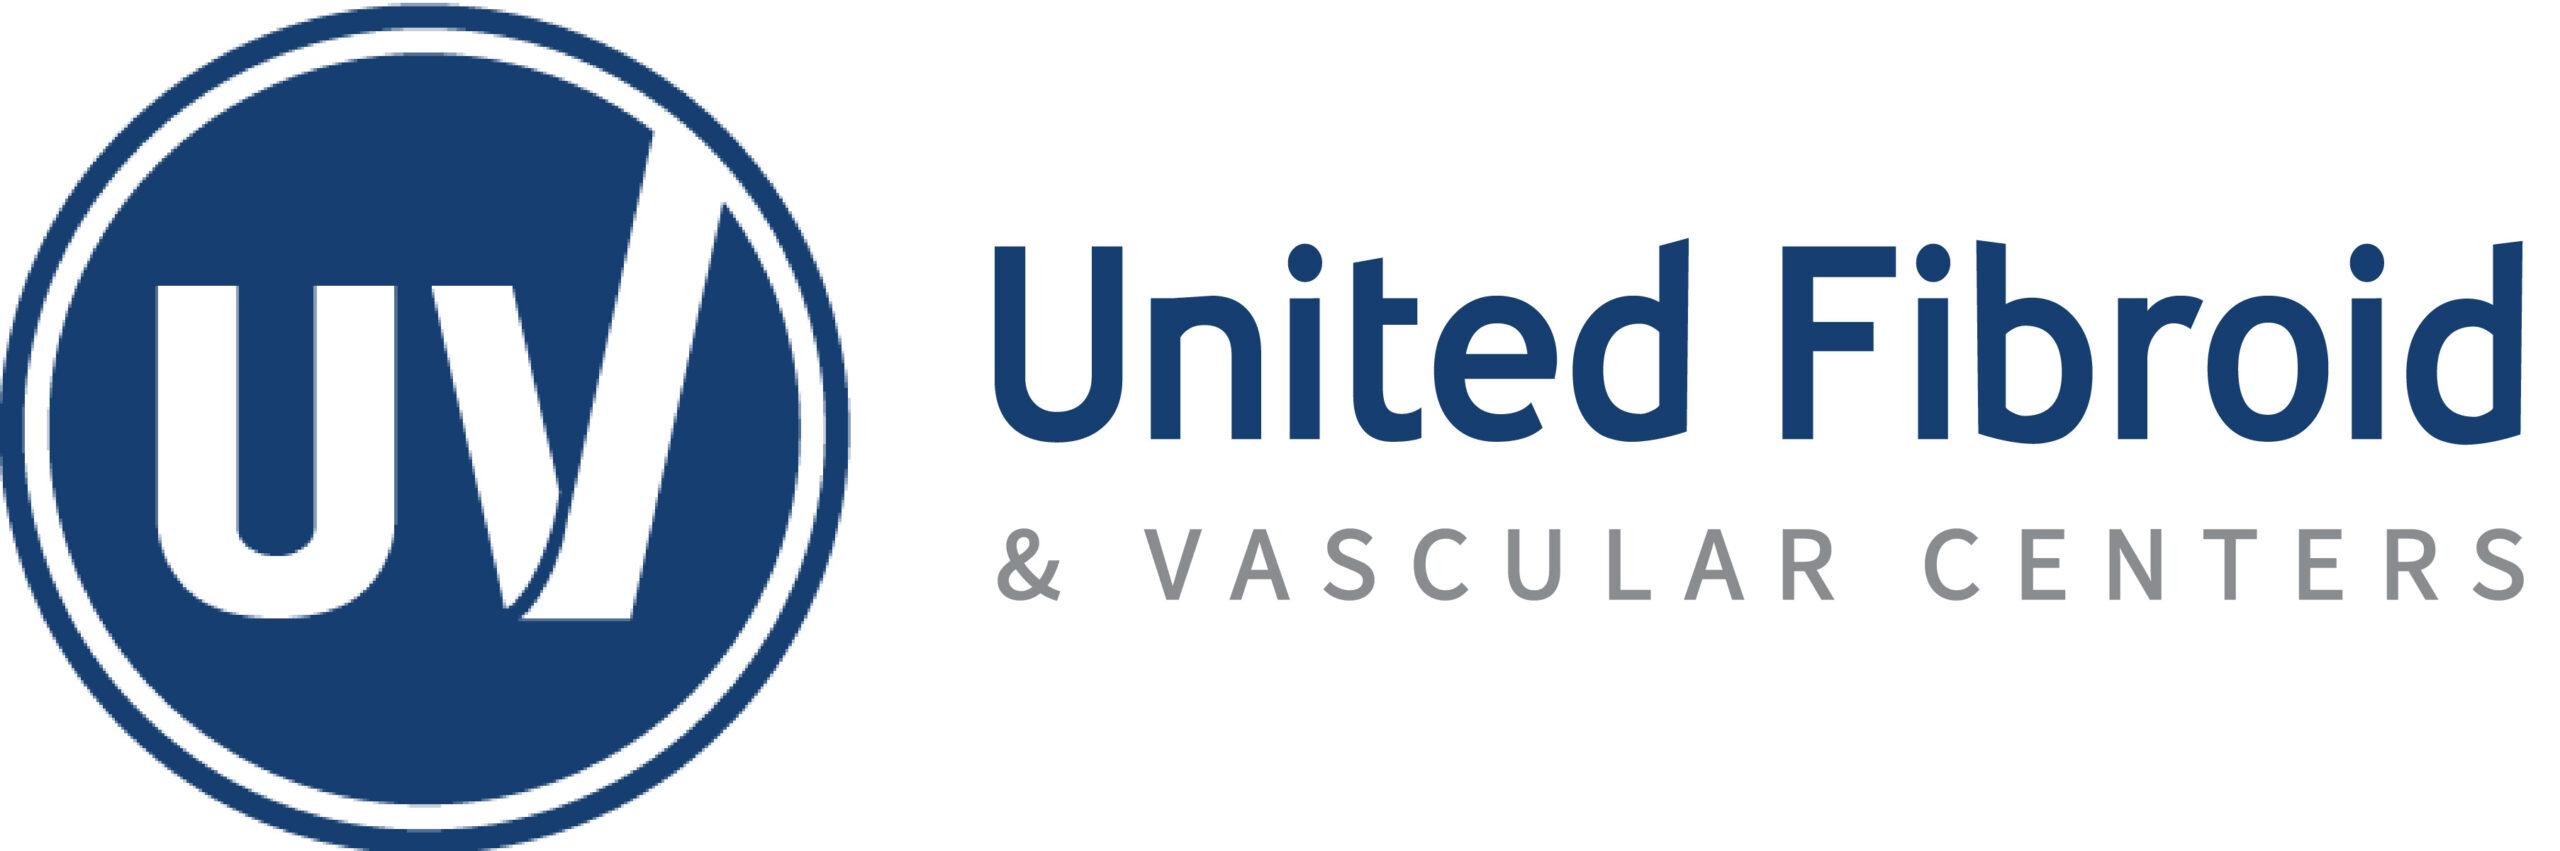 United Fibroid & Vascular Centers